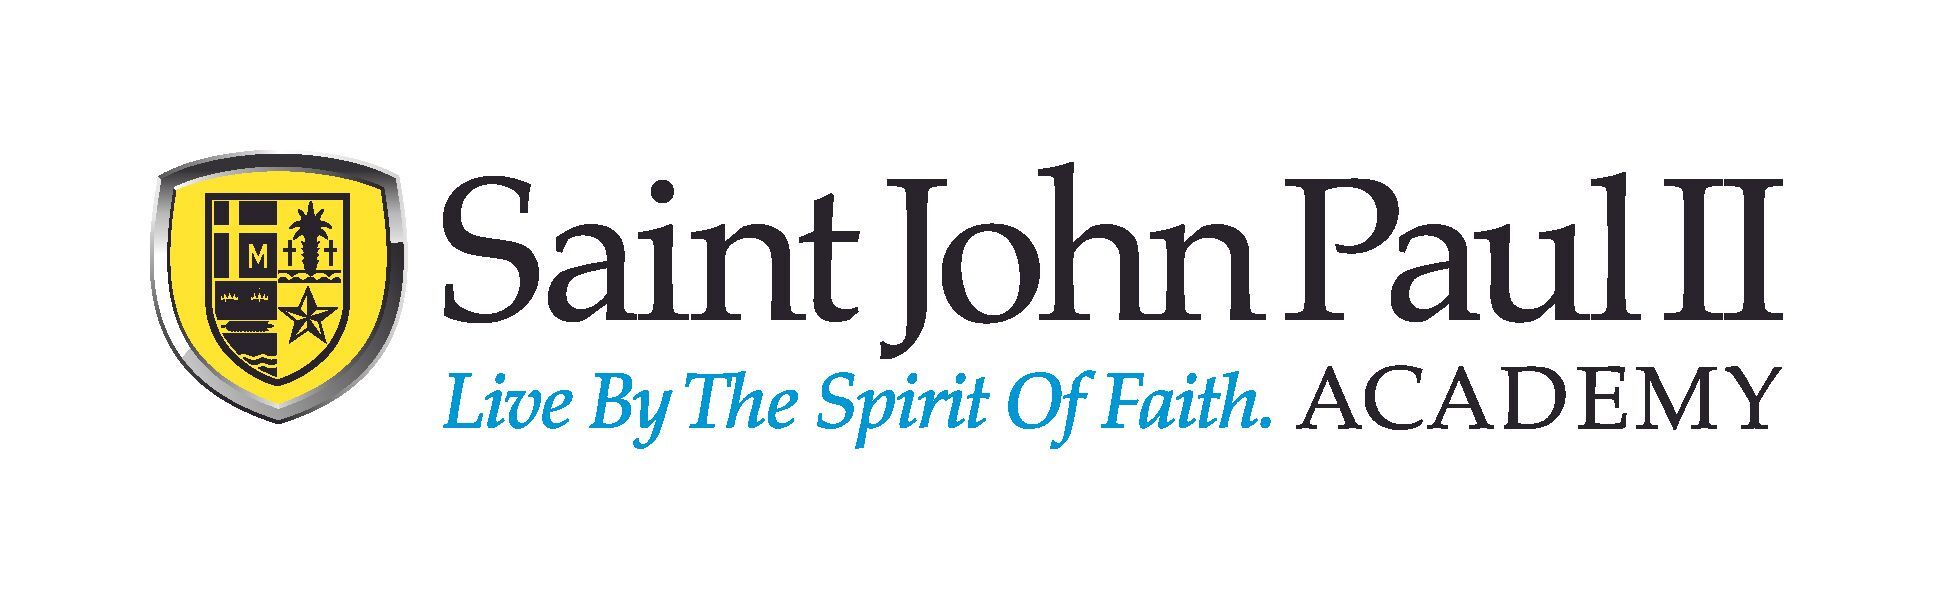 Saint John Paul II Academy Announces 2025 Succession Plan